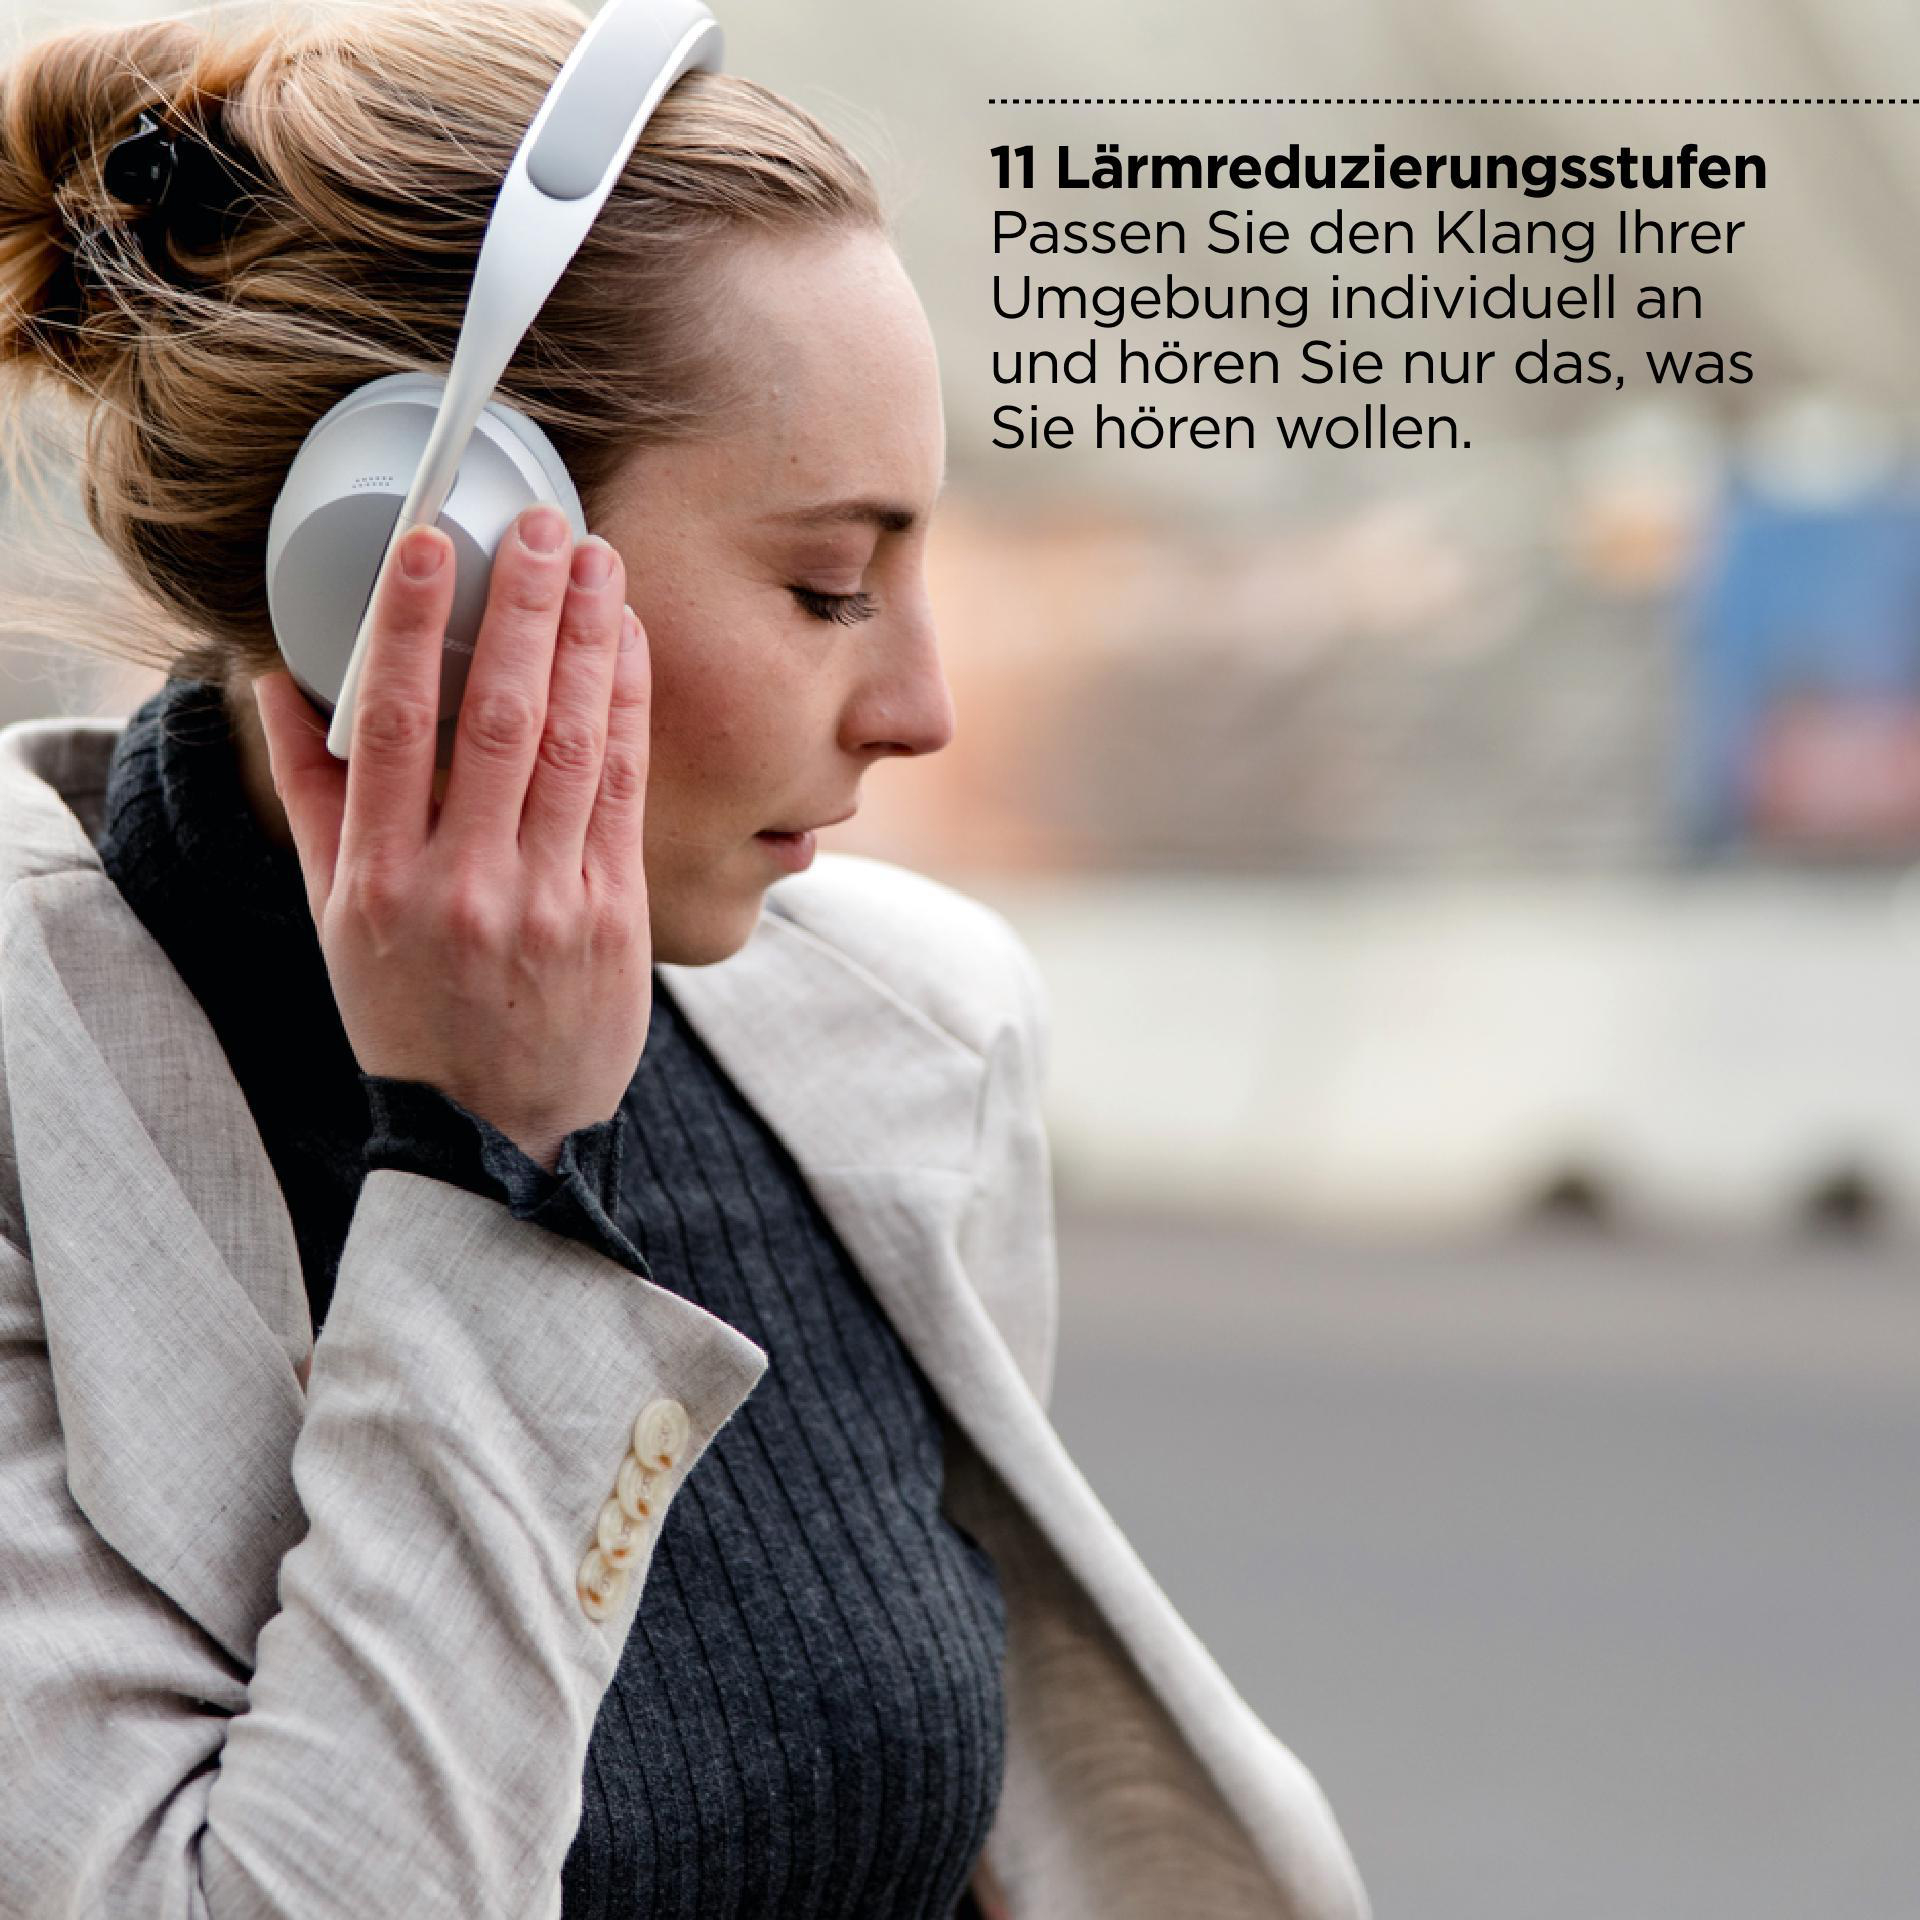 BOSE Headphones kabellose Noise-Cancelling, Bluetooth Schwarz Over-ear 700 Kopfhörer